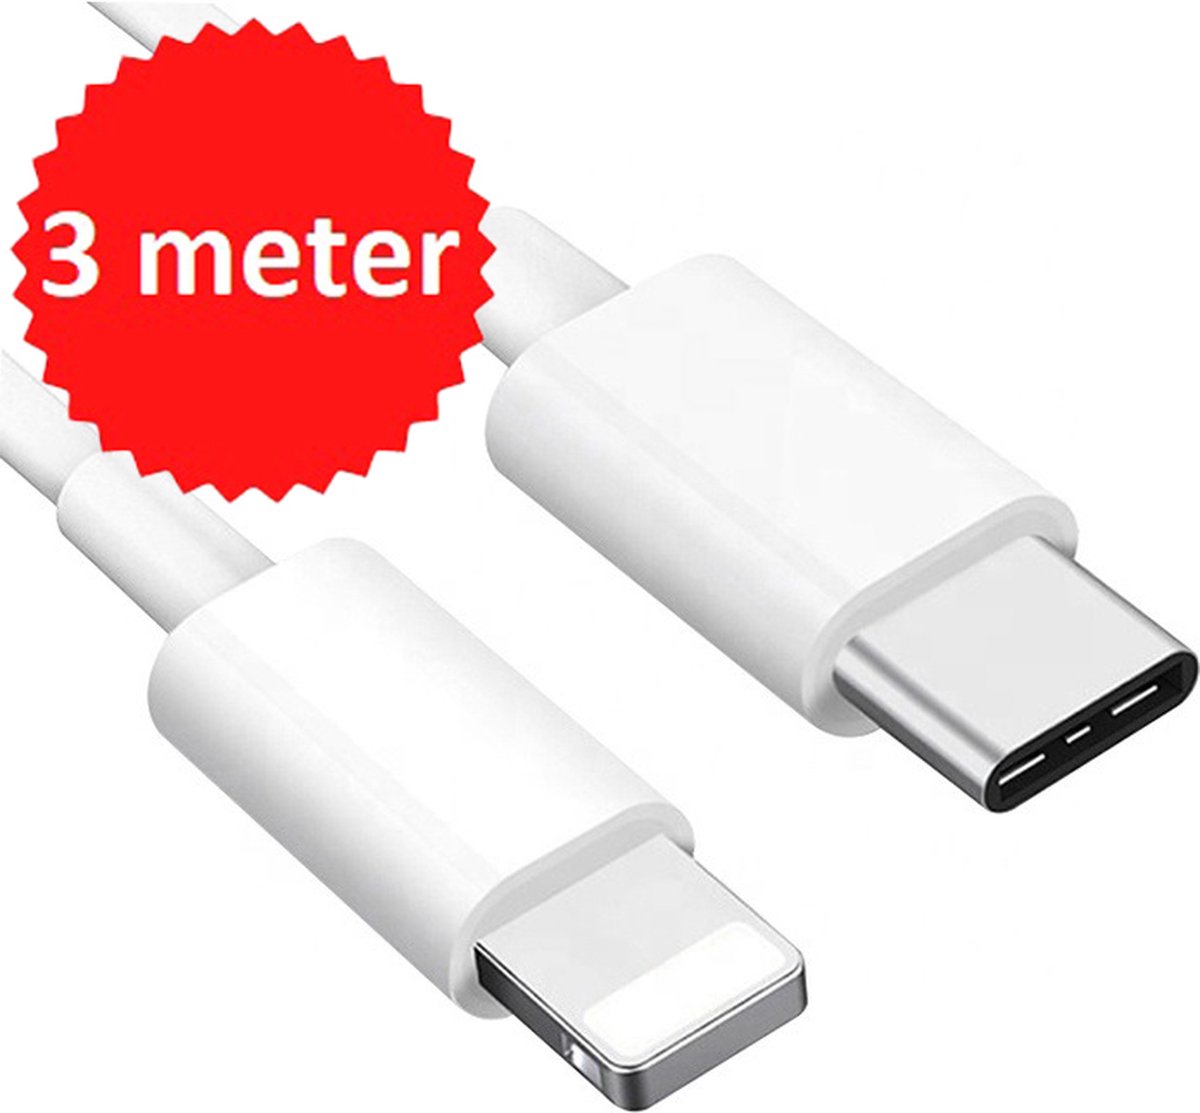 iPhone oplader kabel 3 Meter - iPhone kabel - USB C lightning kabel - iPhone lader kabel geschikt voor Apple iPhone 6,7,8,9,X,XS,XR,11,12,13